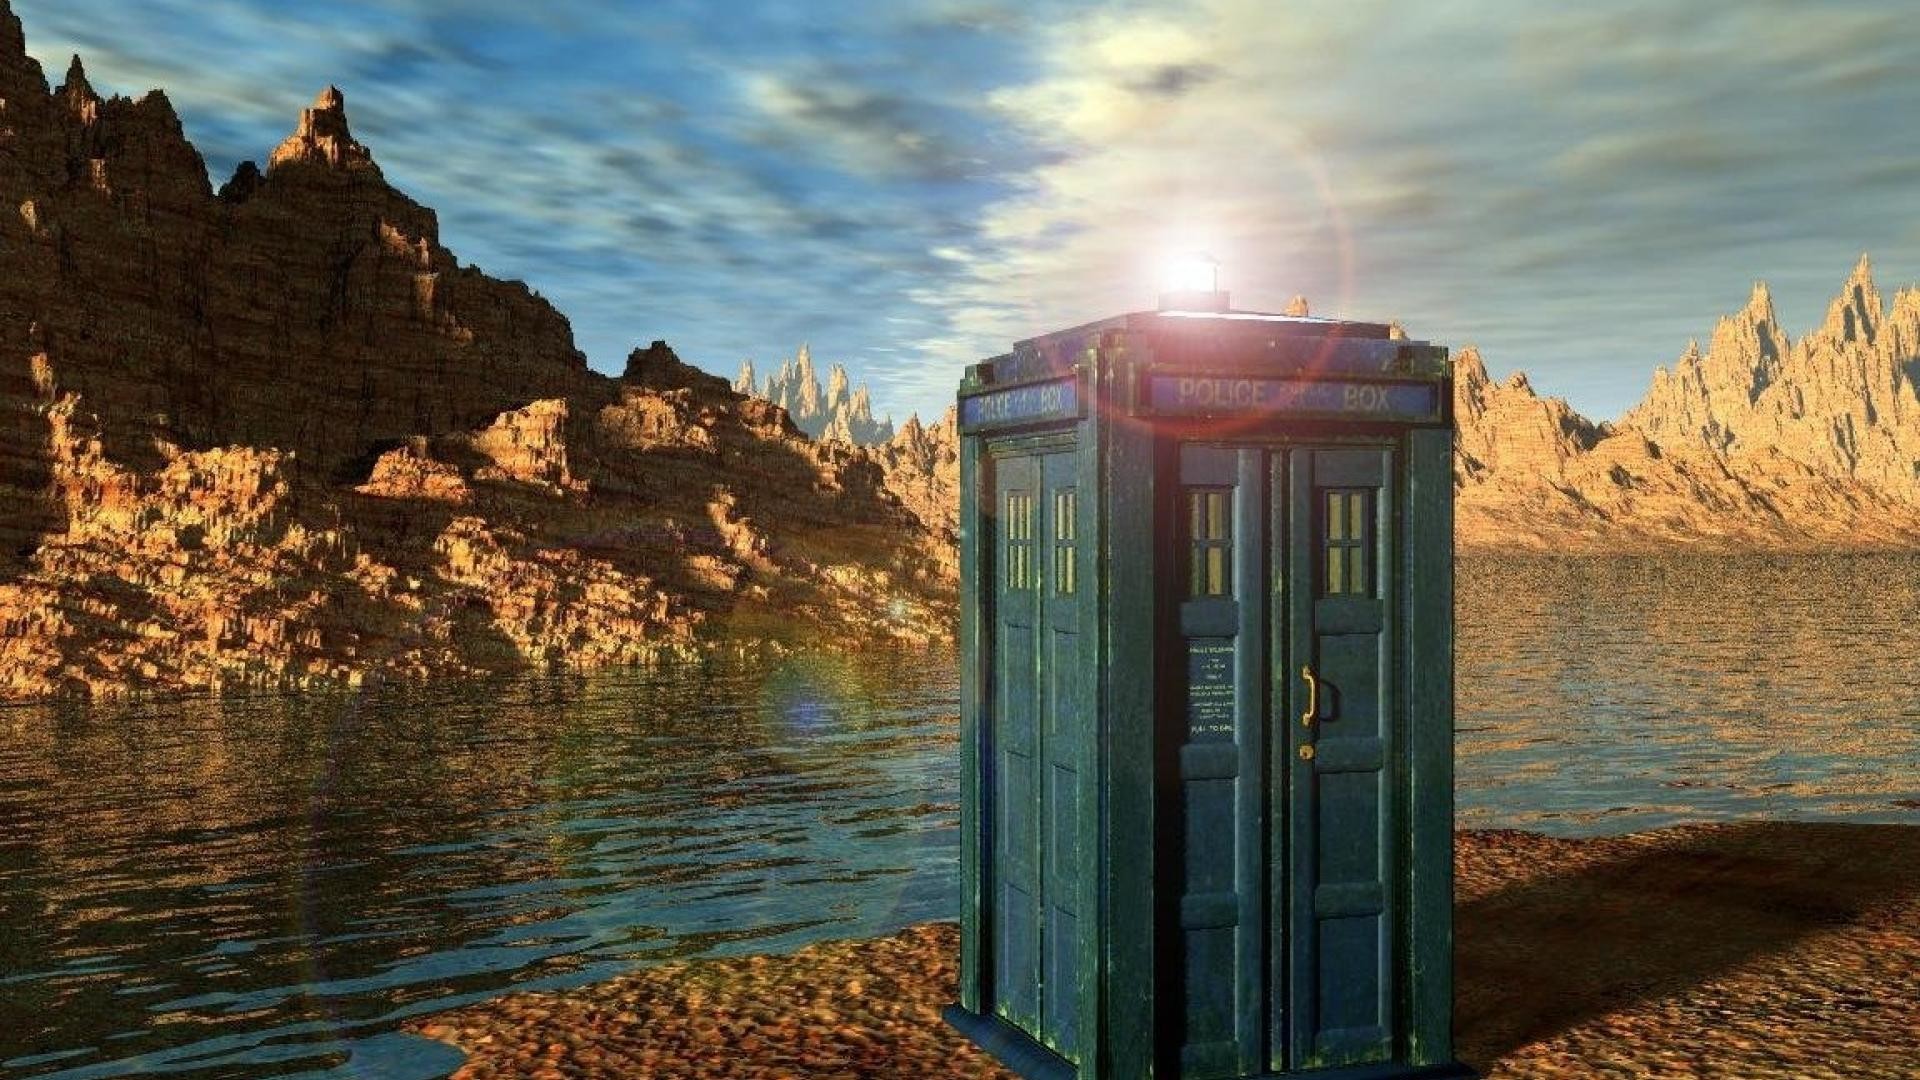 tardis doctor who movies phone box hd wallpaper – (#26349) – HQ .